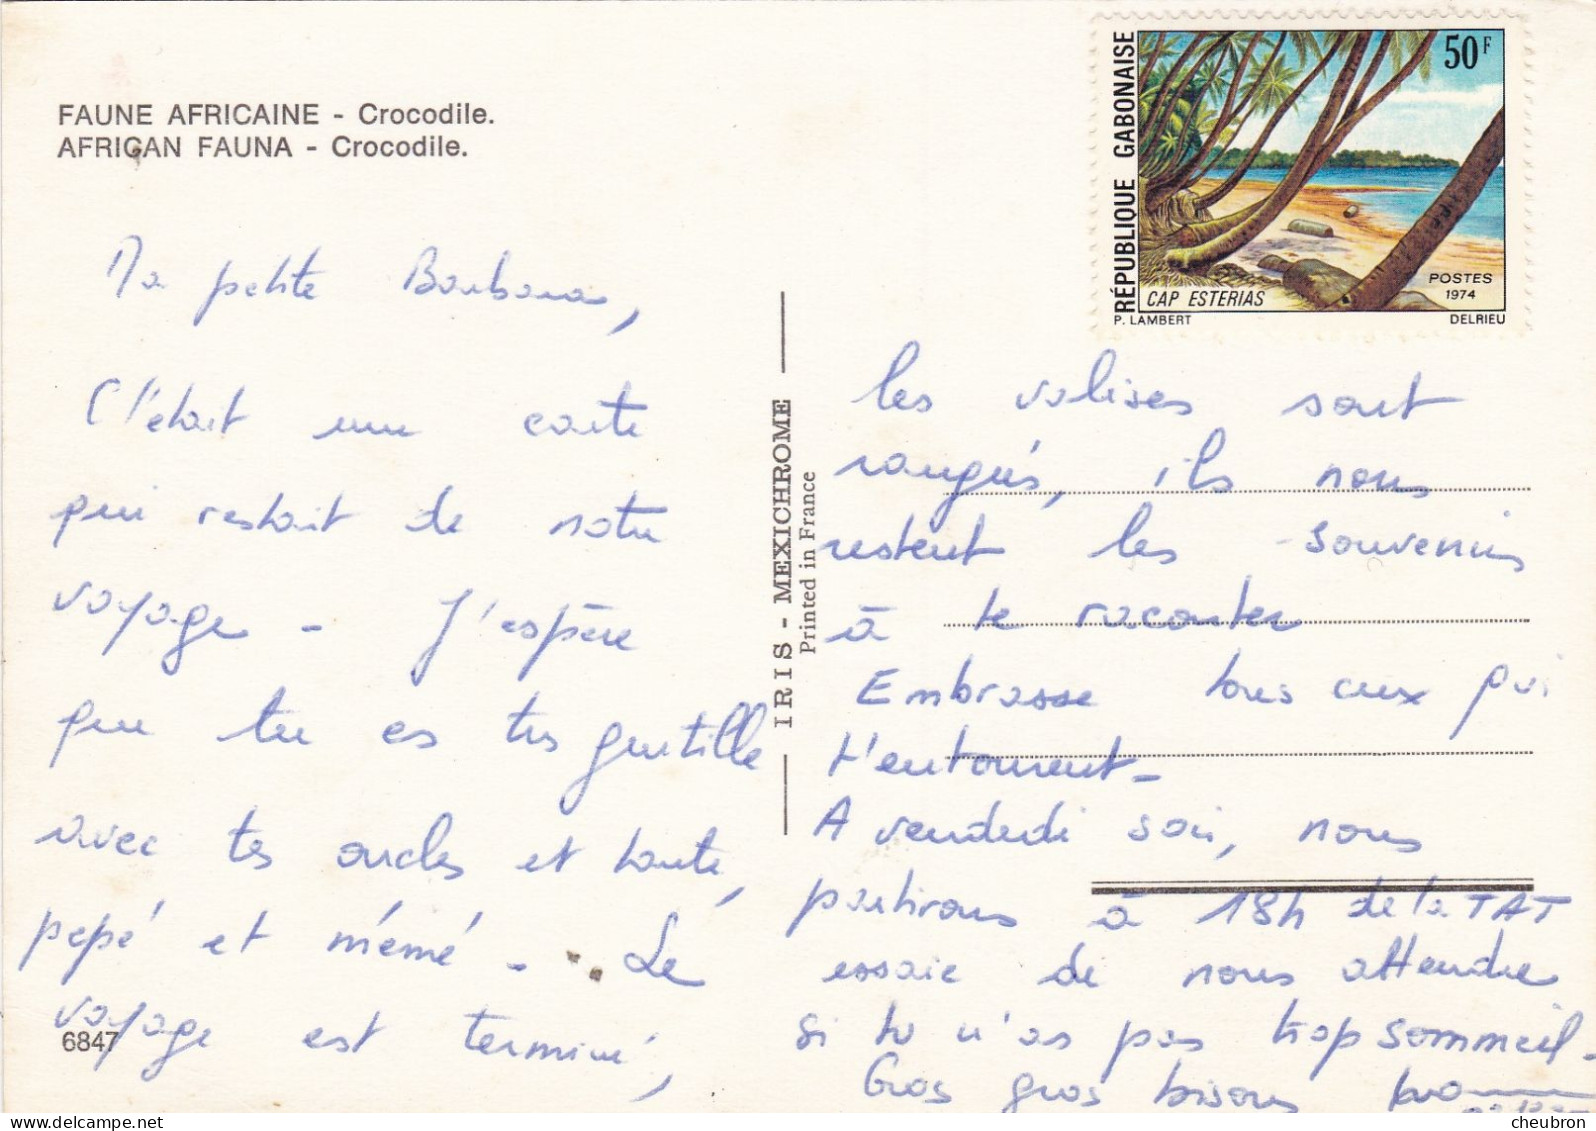 GABON. (ENVOYE DU). FAUNE AFRICAINE. CROCODILE . + TEXTE + TIMBRE ANNEE 1974 .CAP ESTERIAS - Gabon